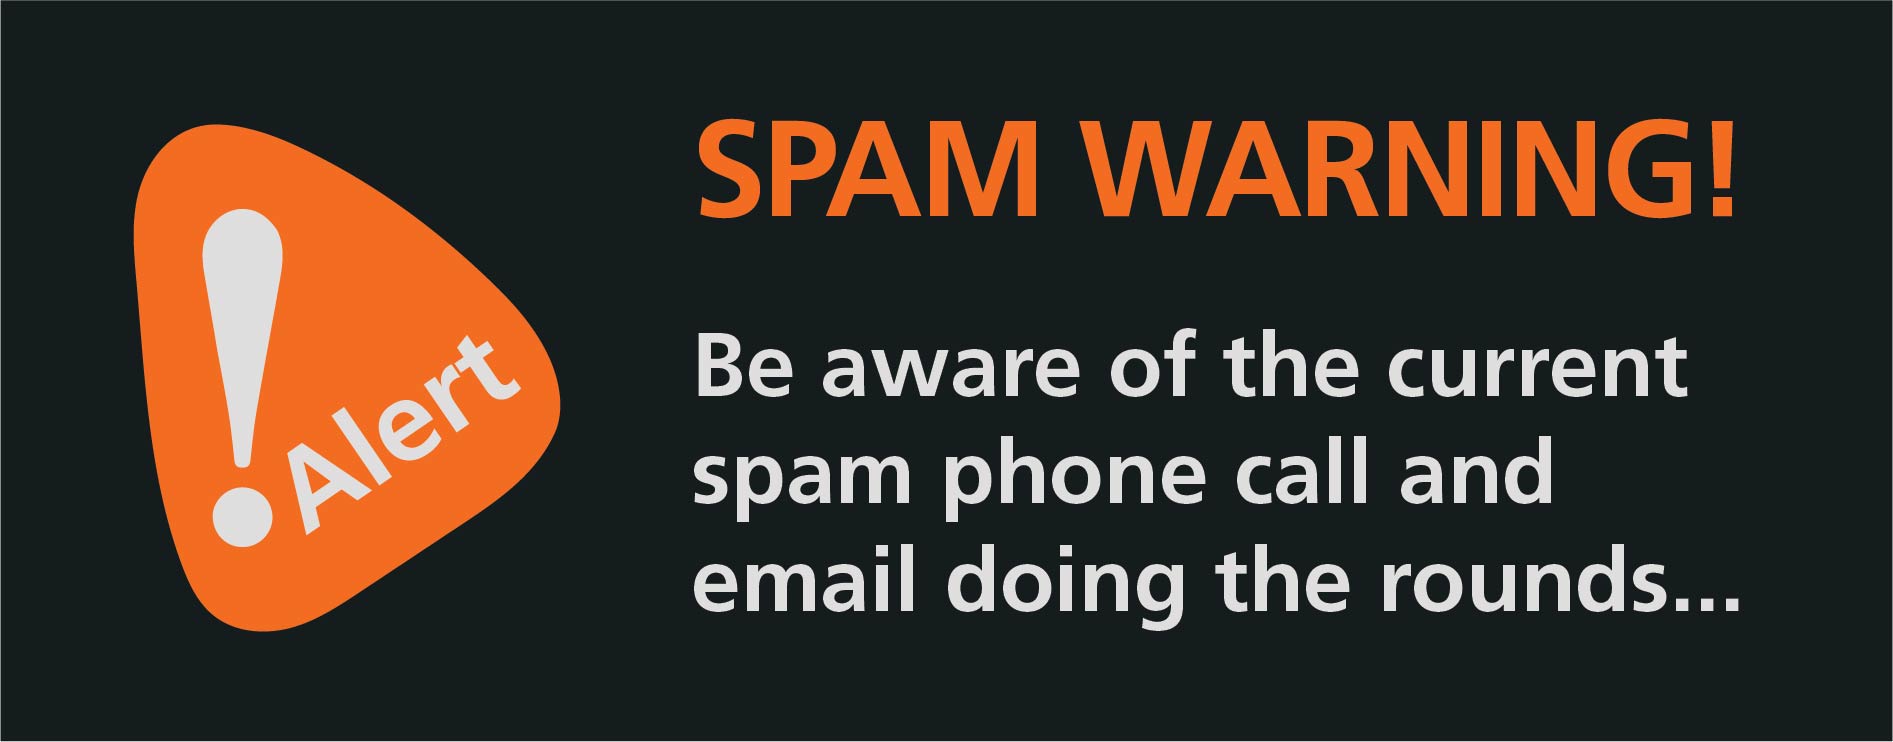 Spam Warning!